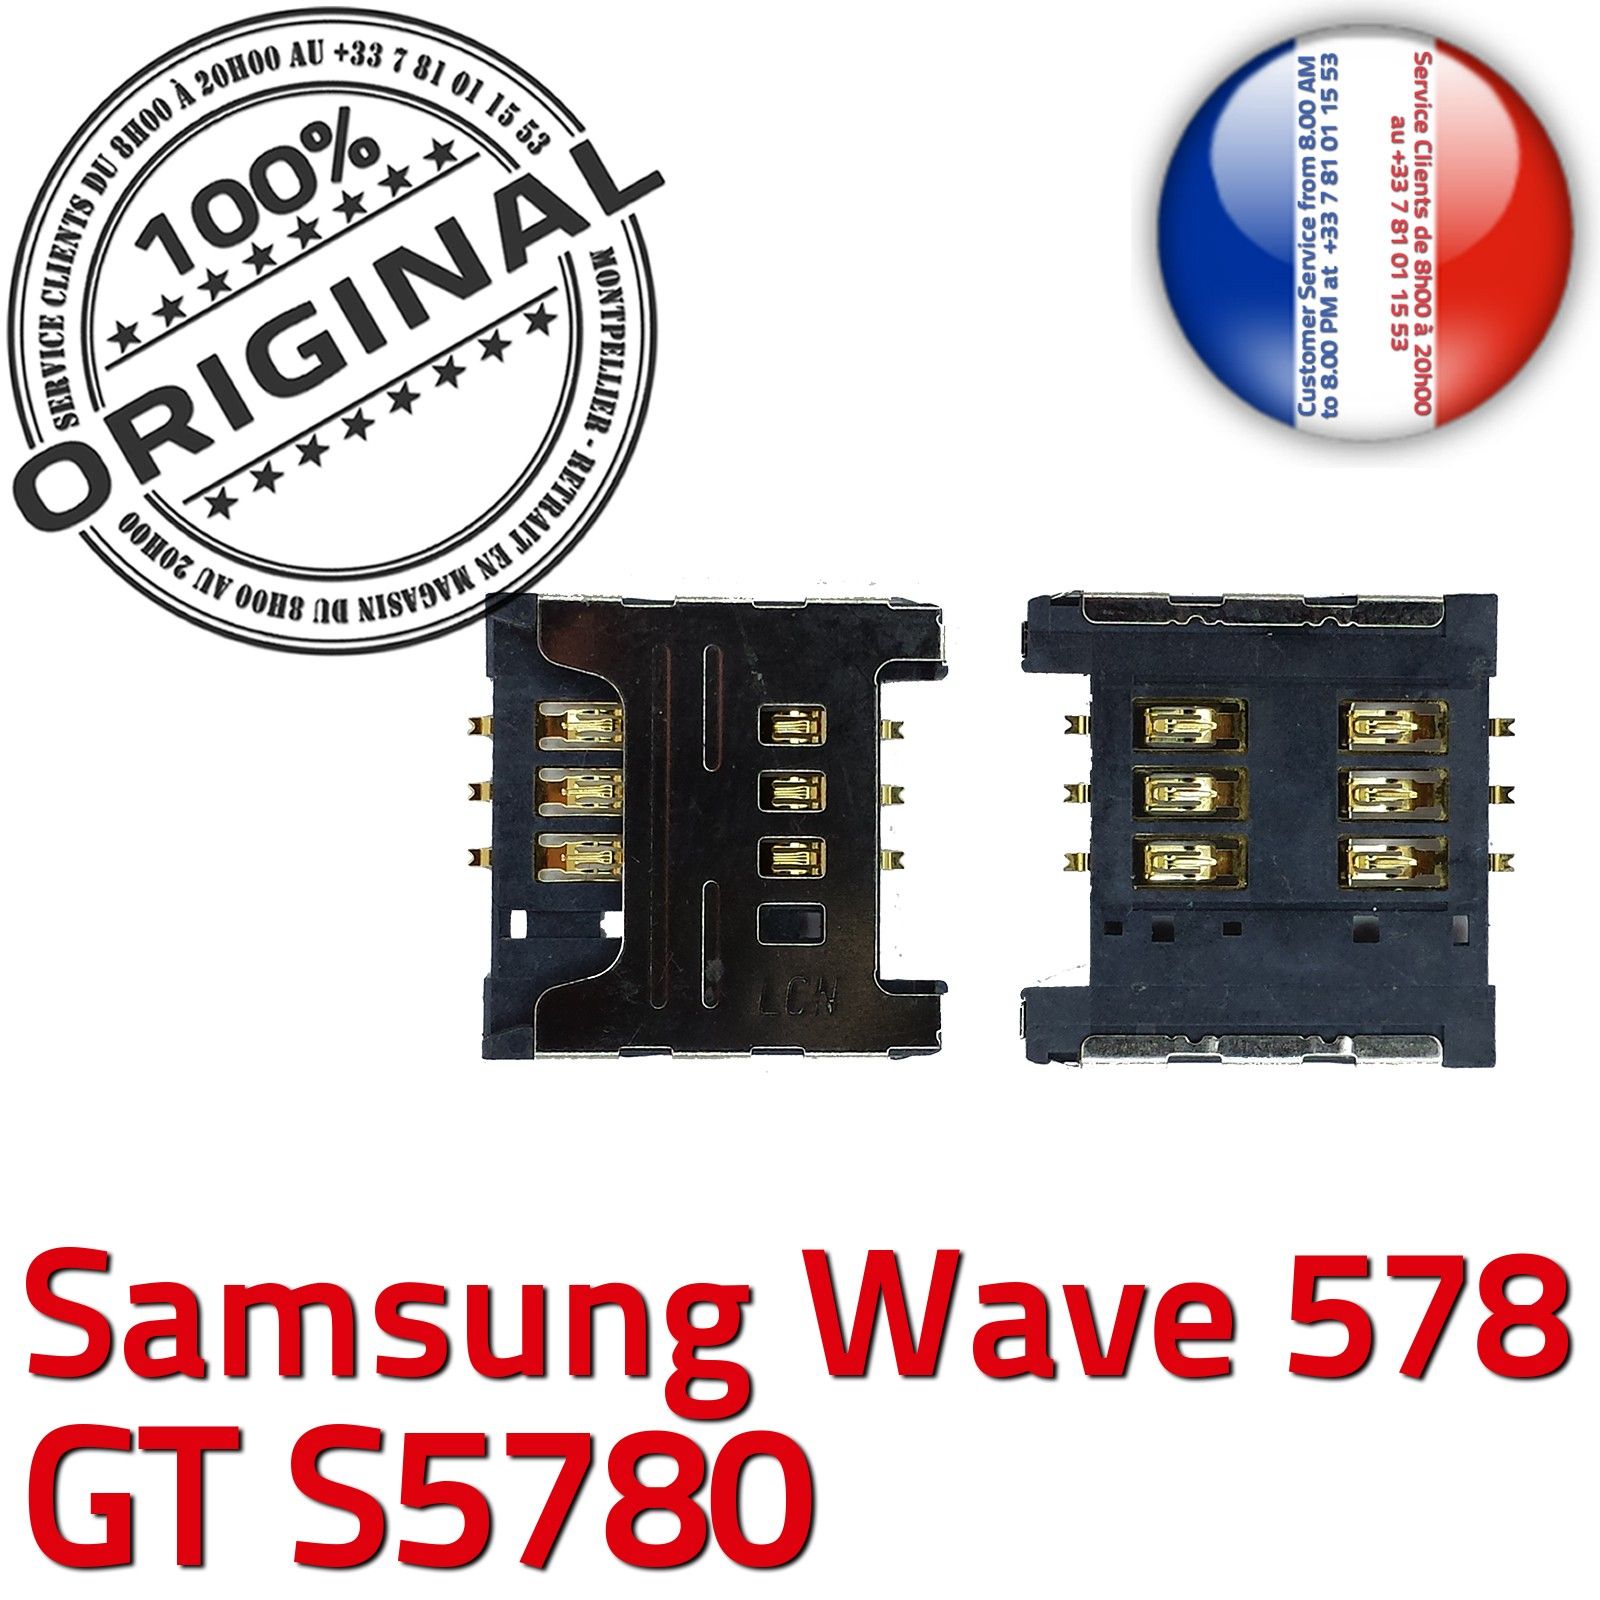 https://media2.24hshop.fr/11278-thickbox_default/original-samsung-wave-578-gt-s5780-lecteur-carte-sim-a-souder-connecteur-contacts-dores-reader-prise-connector-slot-pins-or-card.jpg